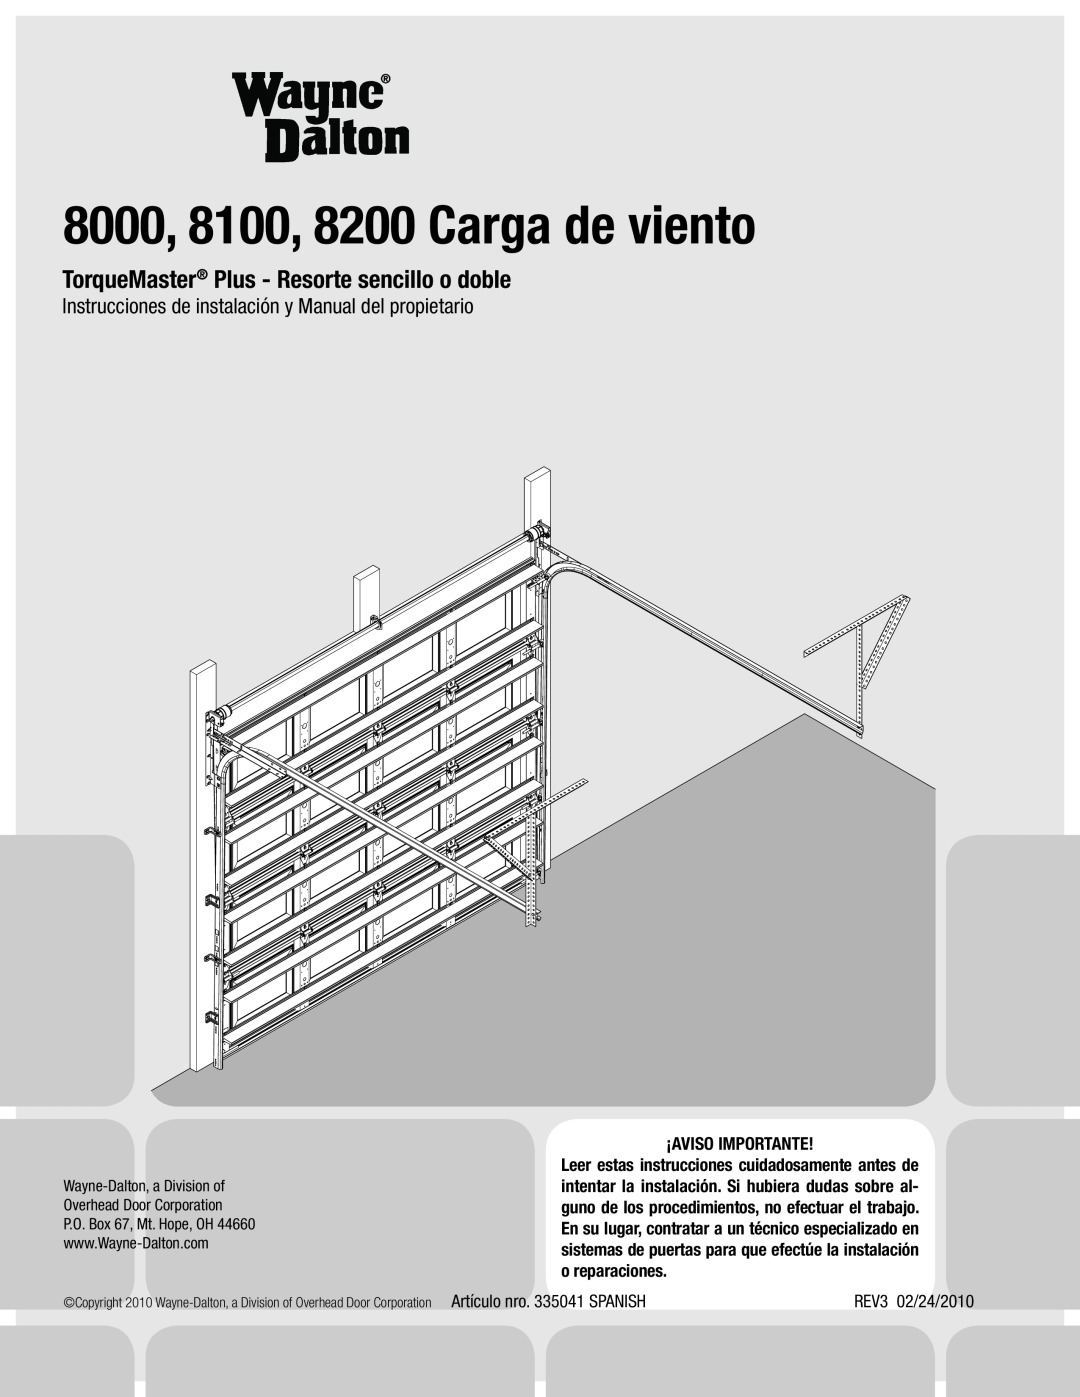 Wayne-Dalton installation instructions All Residential Door Models, 8000 & 9000 Series & Wood Doors, Tools Required 